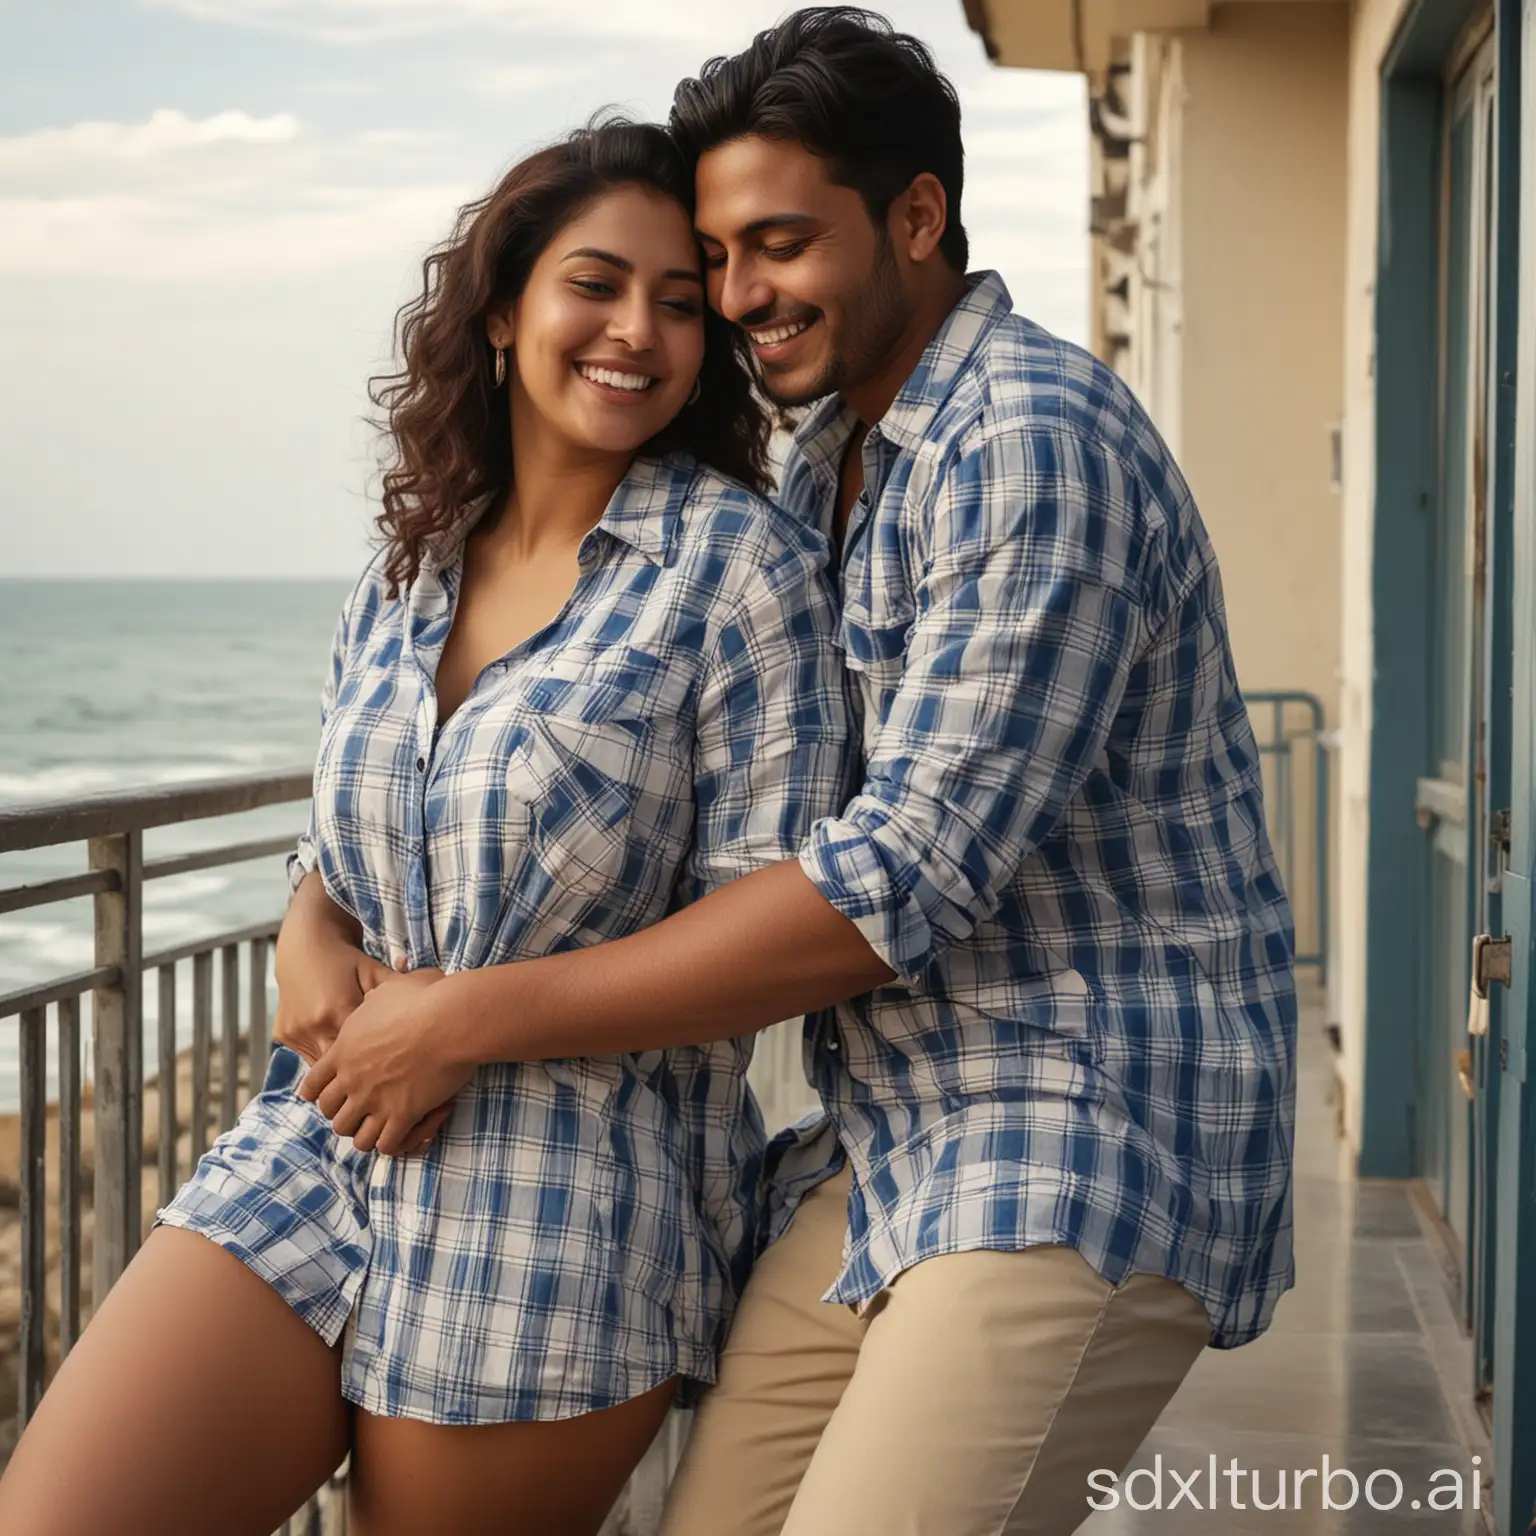 Curvy-Indian-Woman-Embracing-Boyfriend-on-Beach-Balcony